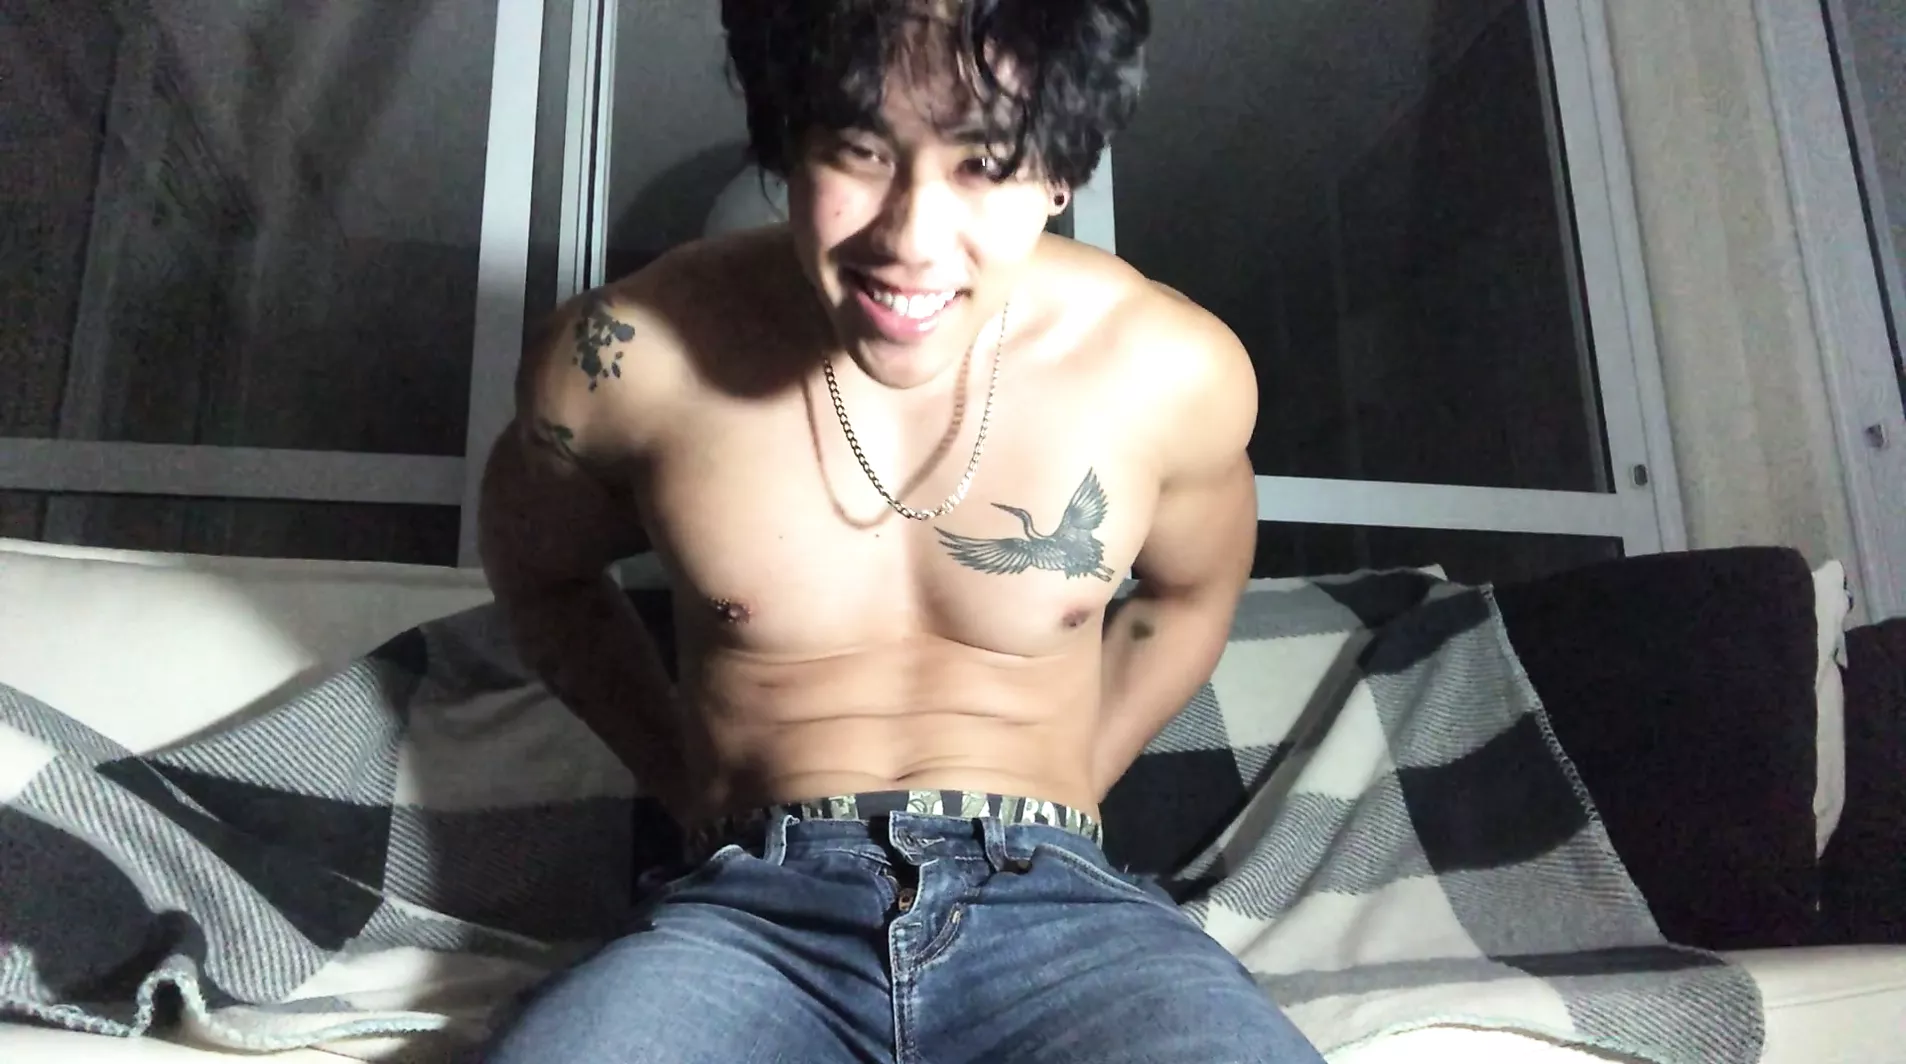 Asian boy massaging muscles and jerking off watch online photo